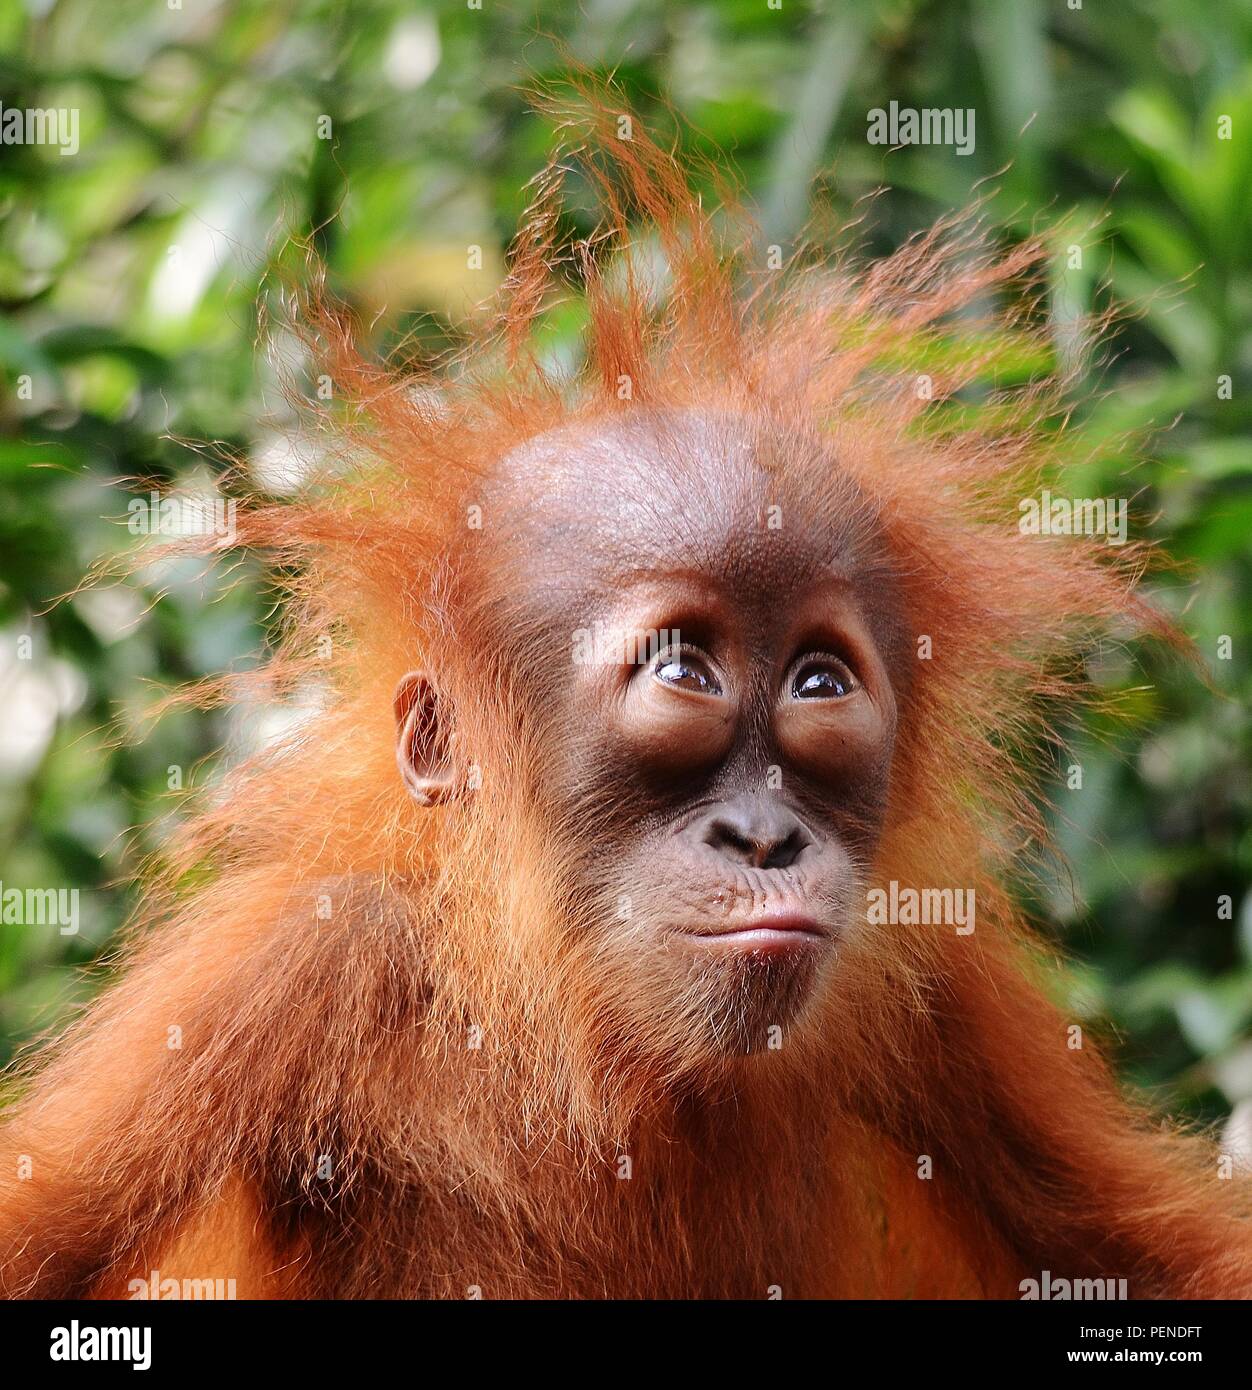 Young Orangutan in Singapore Zoo during feeding time, needs a haircut! Stock Photo